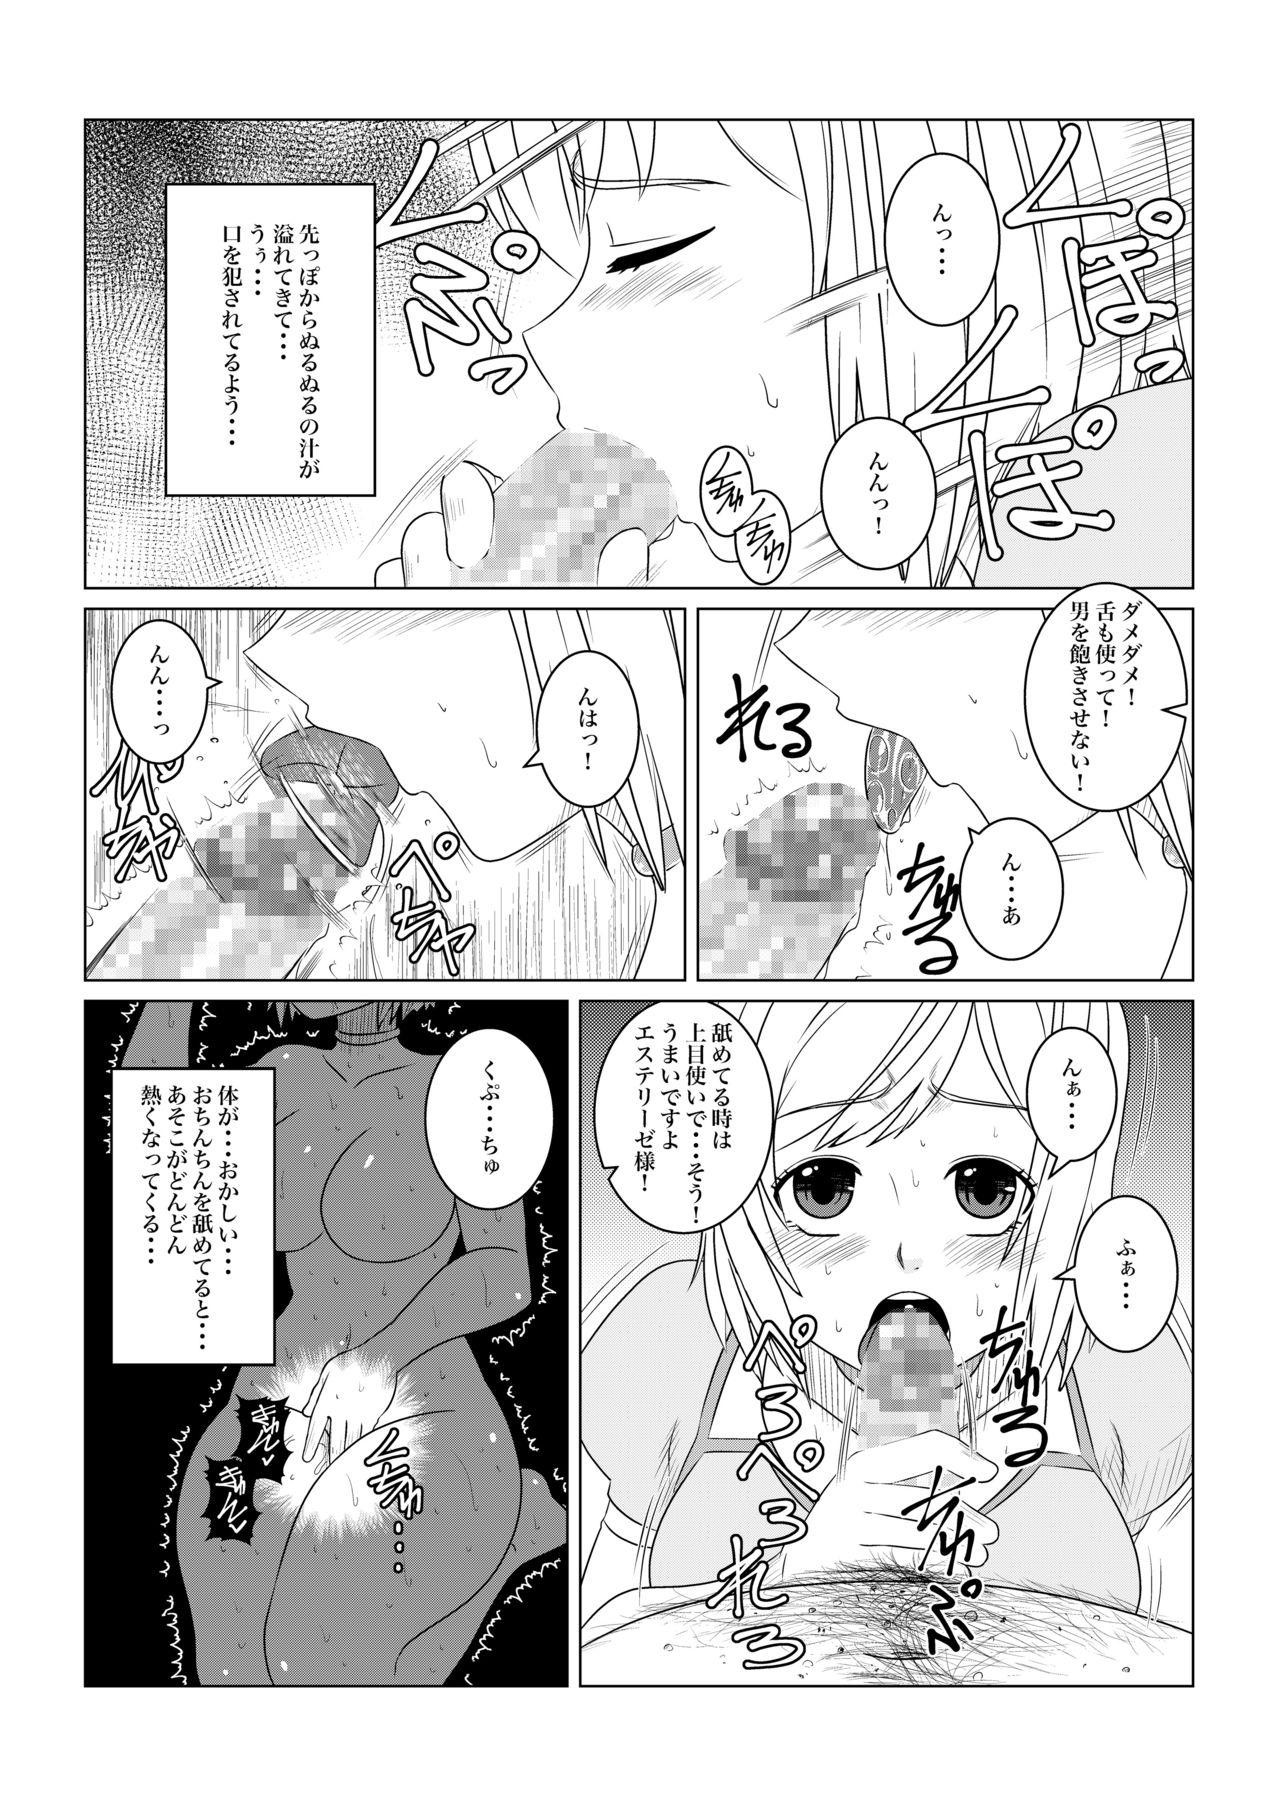 Safado Gekka Midarezaki - Tales of vesperia Worship - Page 11